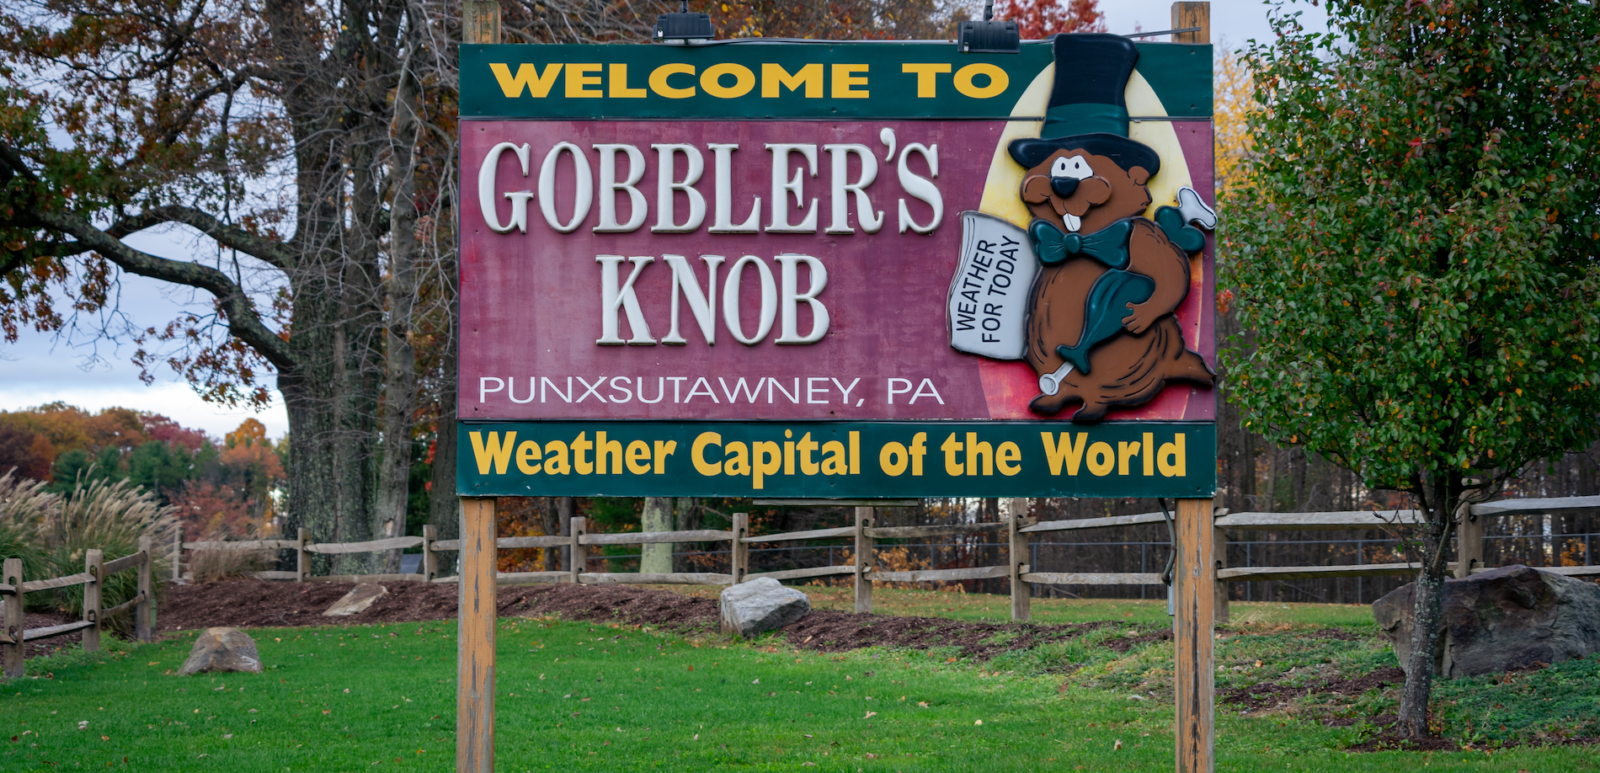 Punxsutawney, PA Oct 24, 2020: Gobbler's Knob . Groundhog Day. February 2